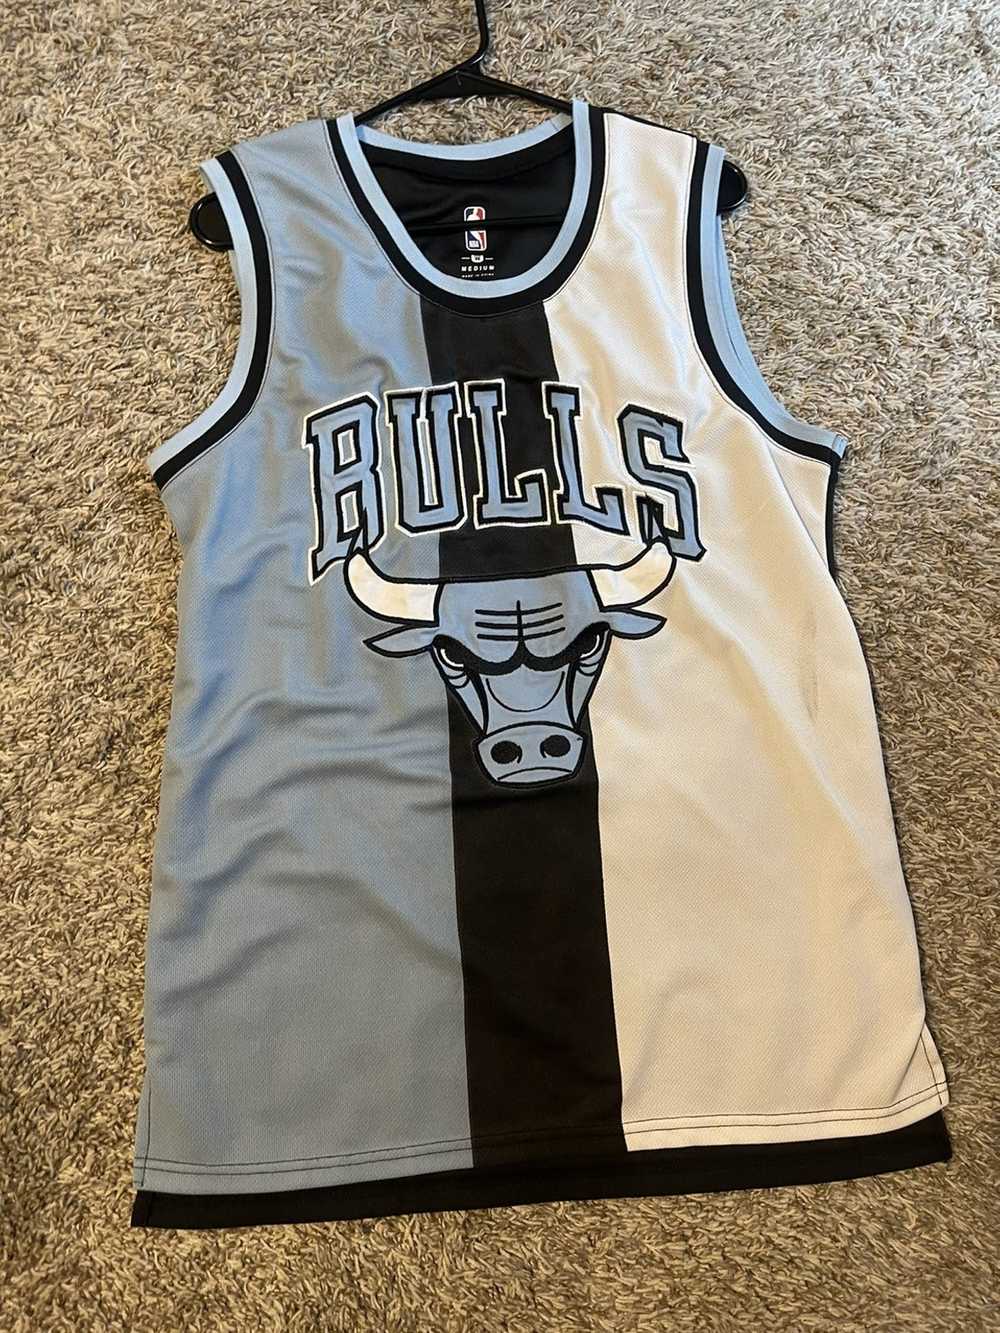 NBA Unc Chicago bulls jersey - image 1